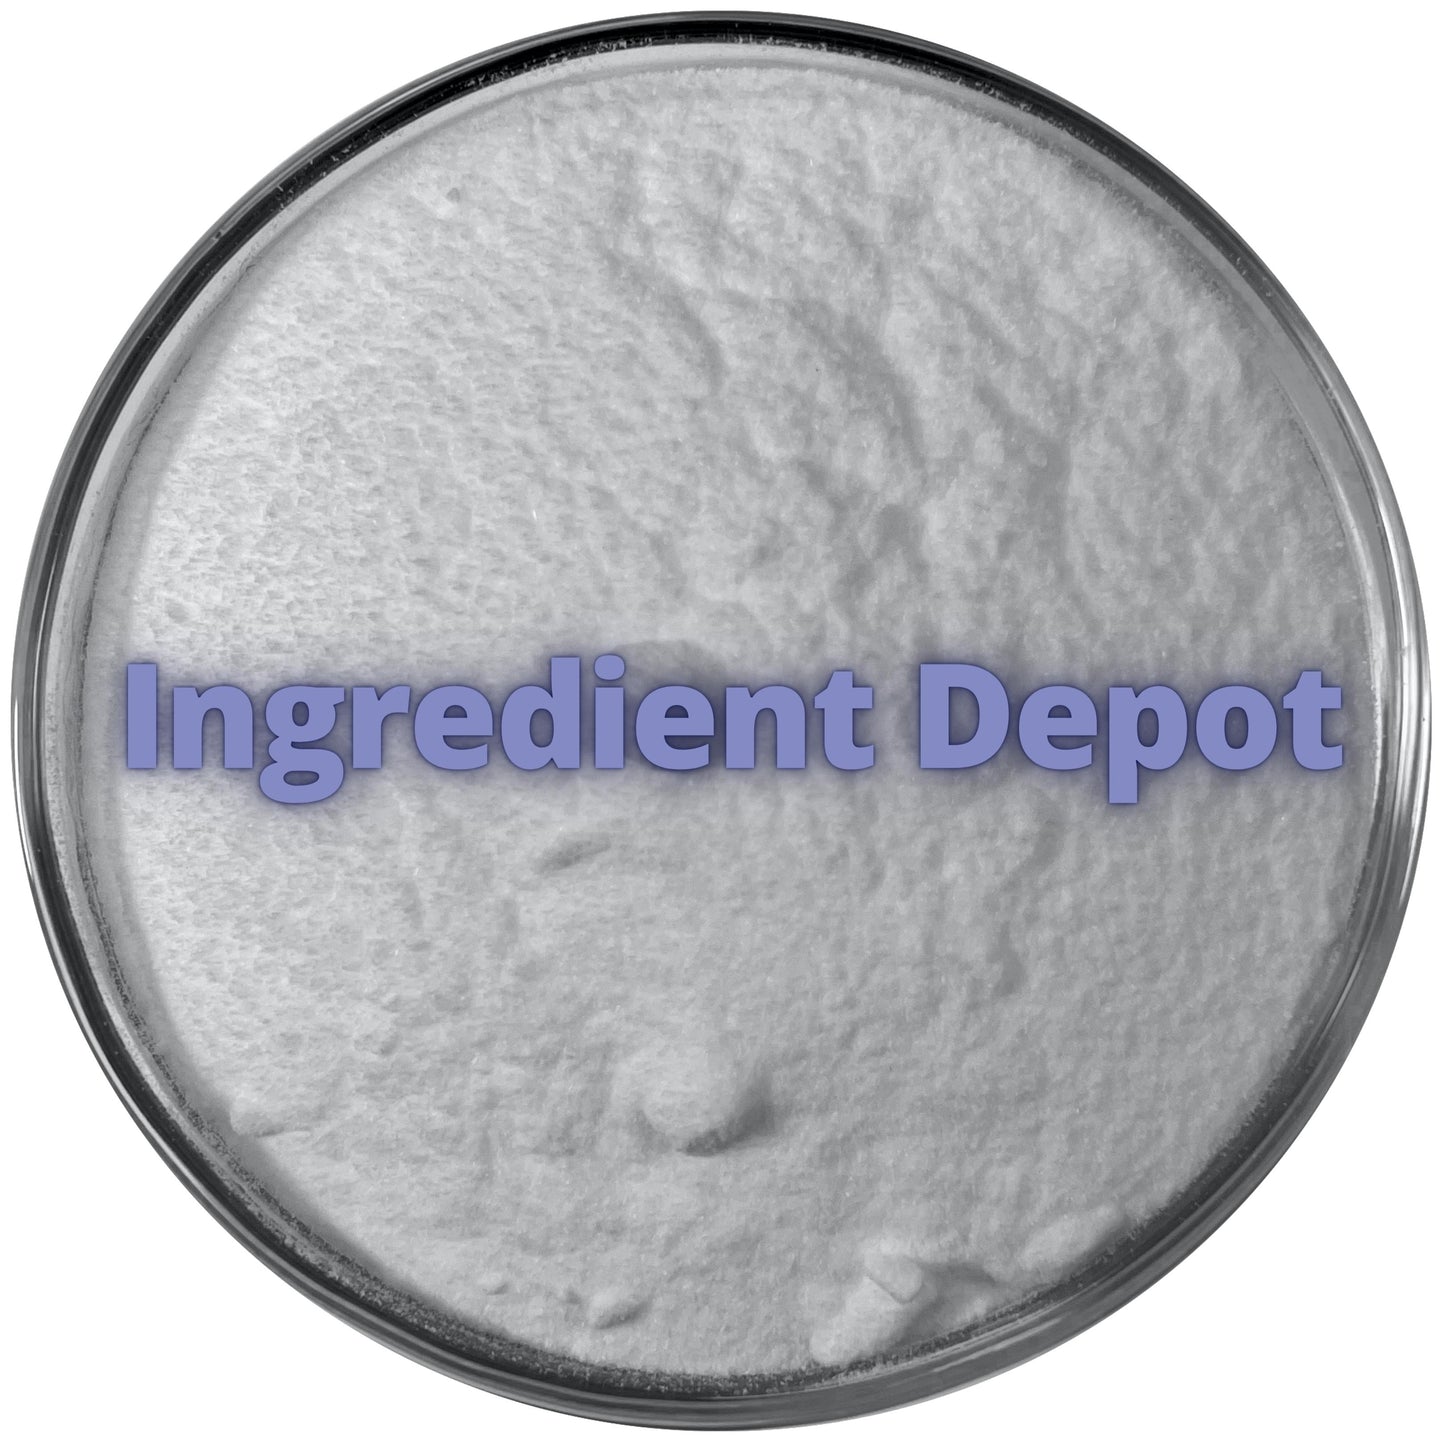 Titanium Dioxide Food and USP Grade 25 kgs - IngredientDepot.com